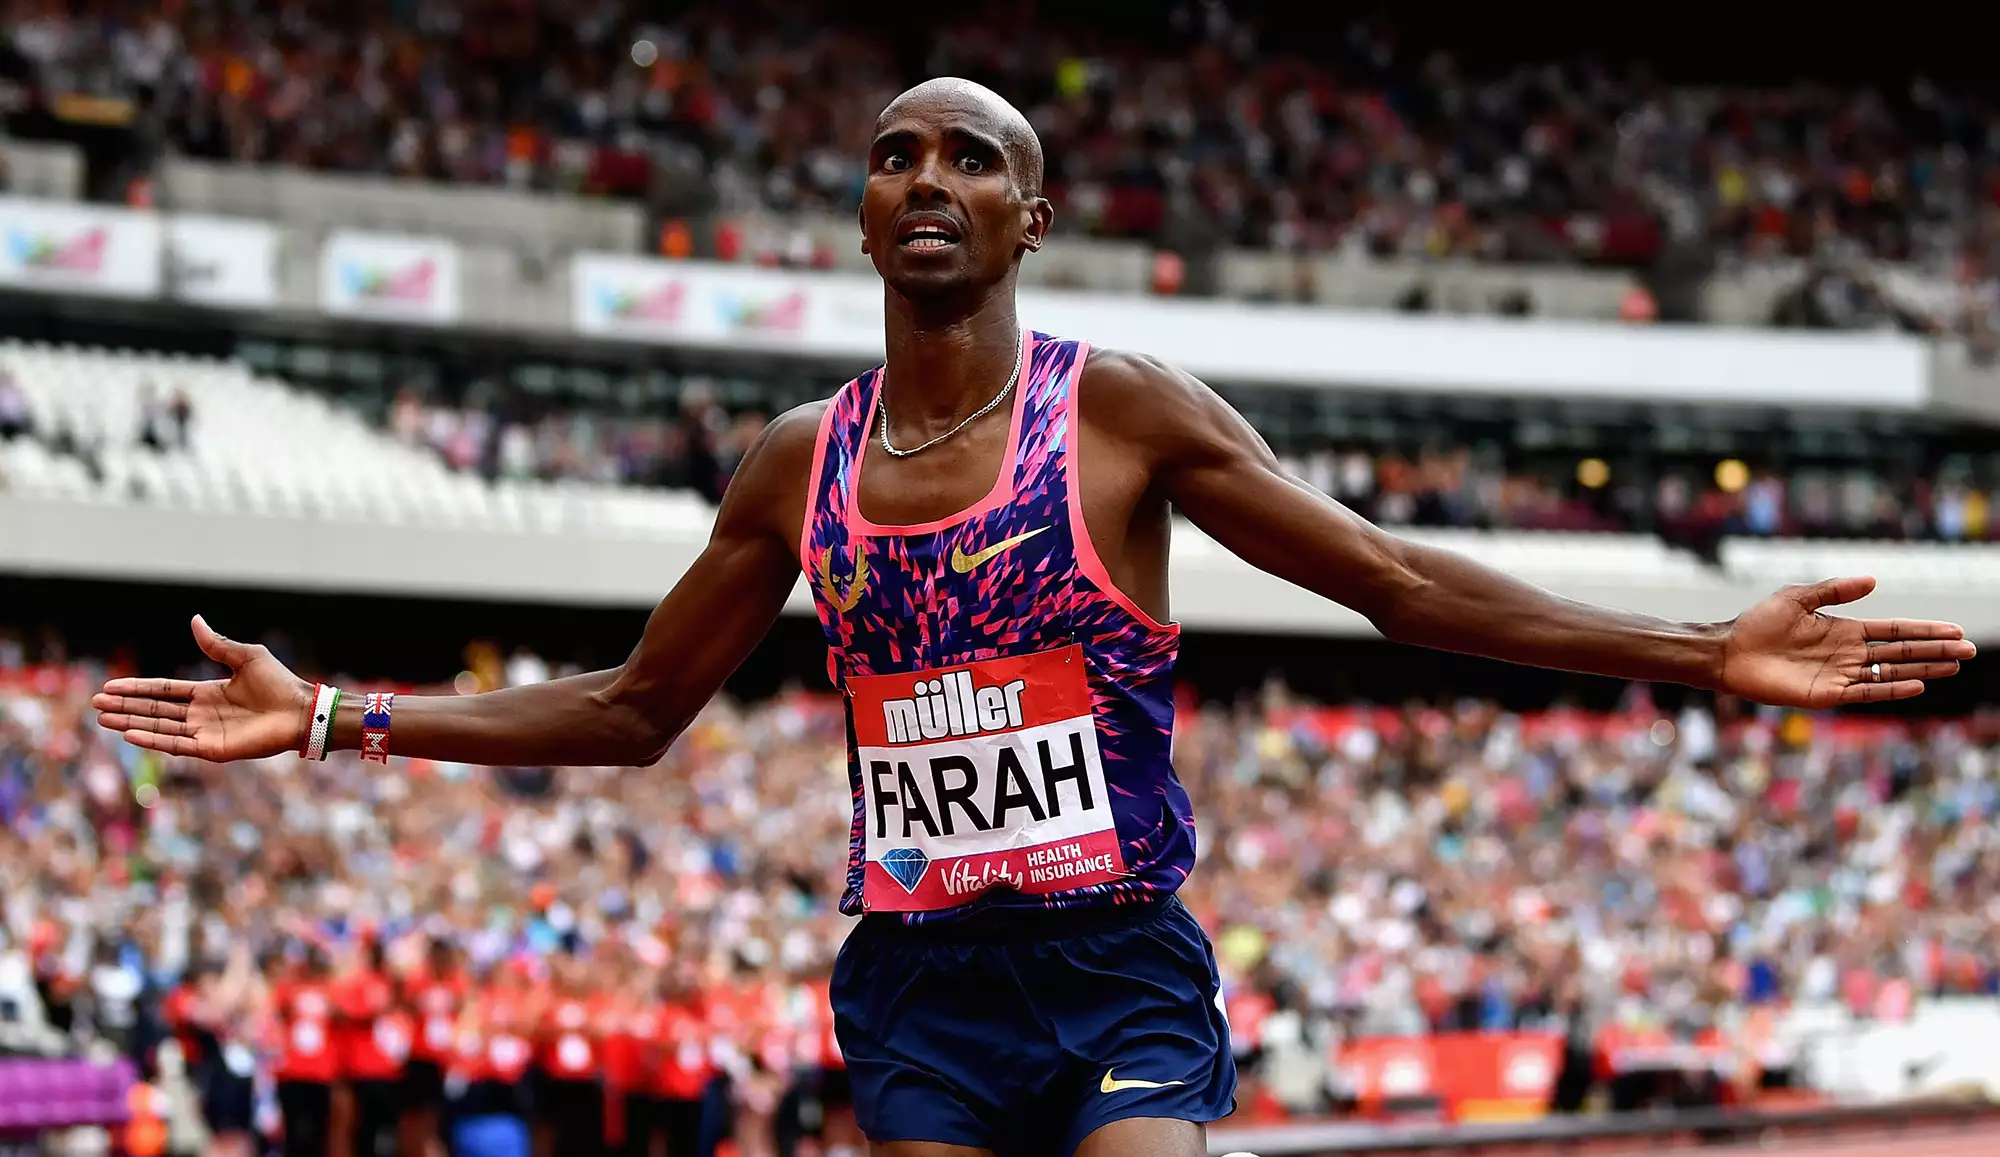 Former Olympic champion Mo Farah reveals real identity